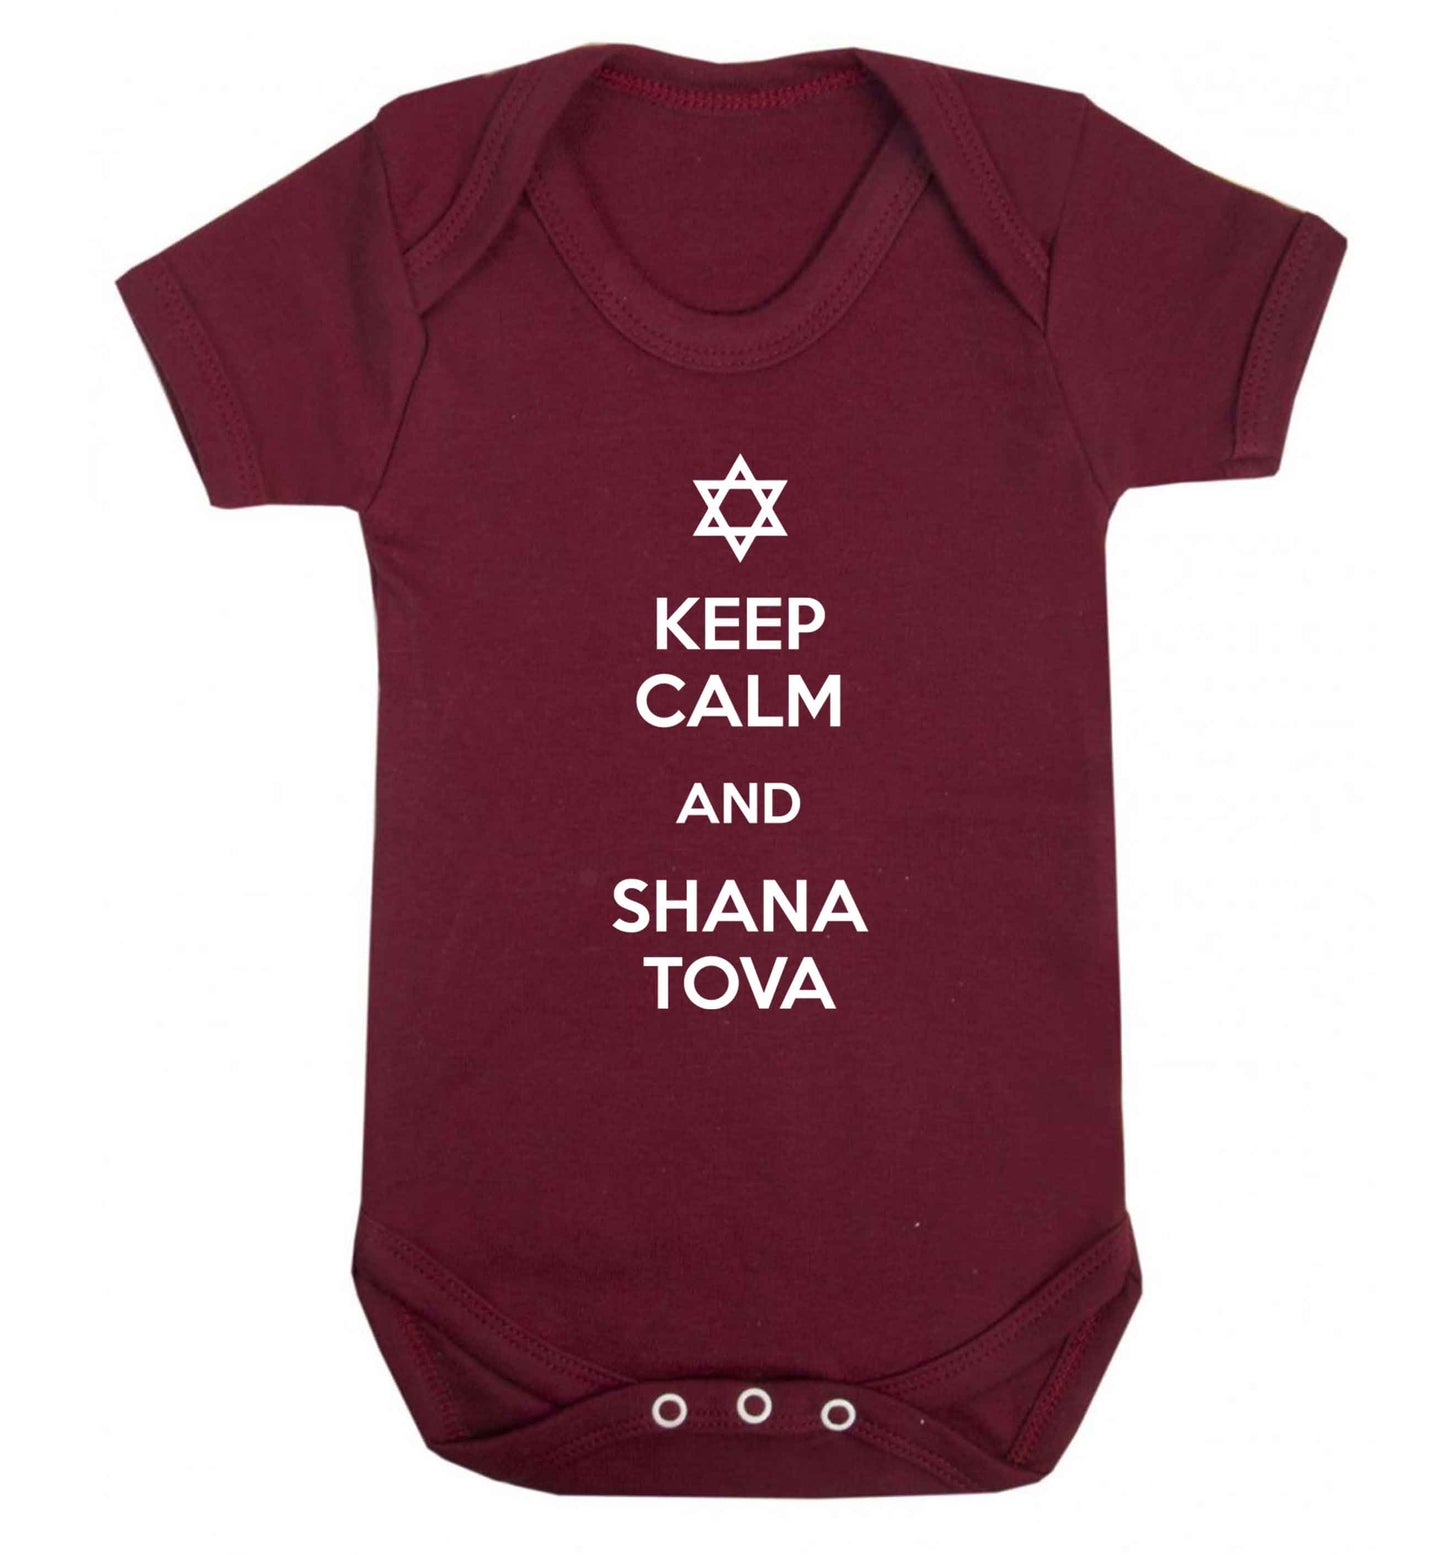 Keep calm and shana tova Baby Vest maroon 18-24 months